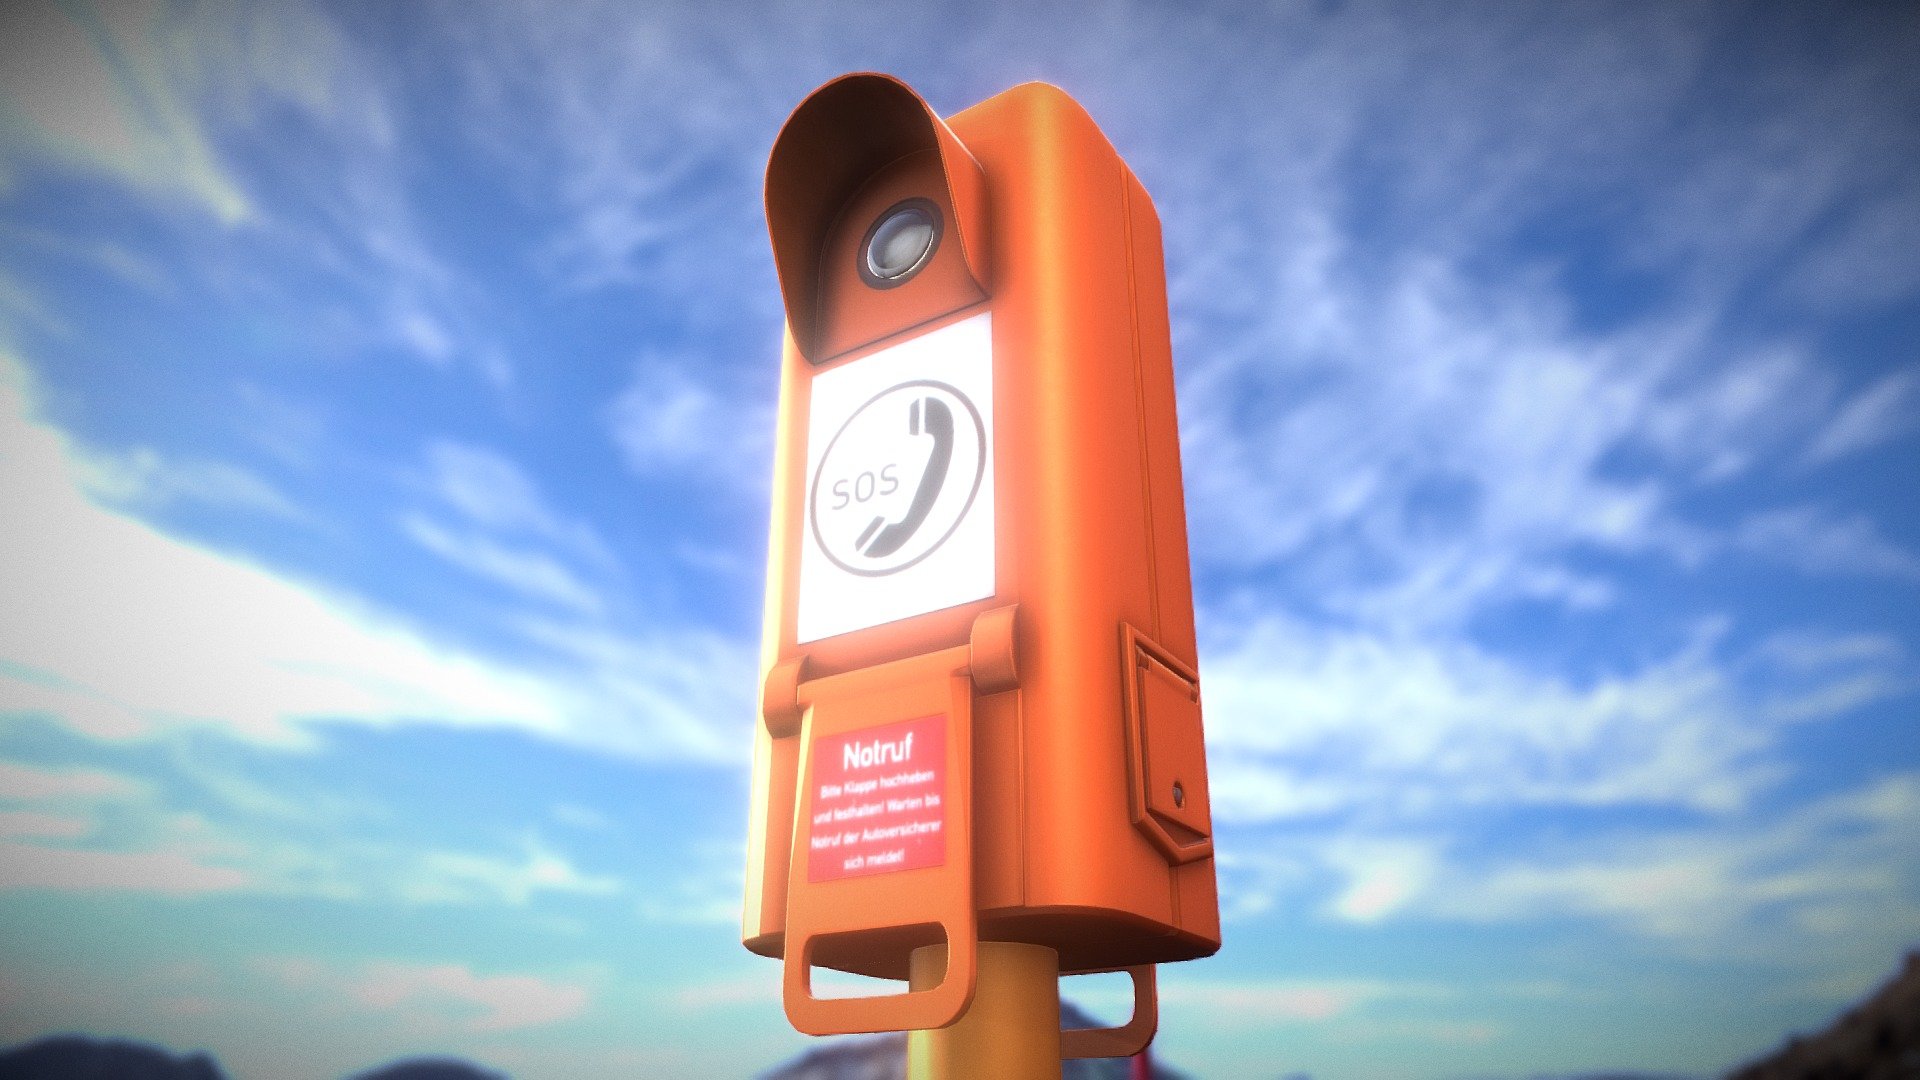 A highway emergency telephone.



Eine Autobahn Notrufsäule.







Modeled and textured in Blender 3d model